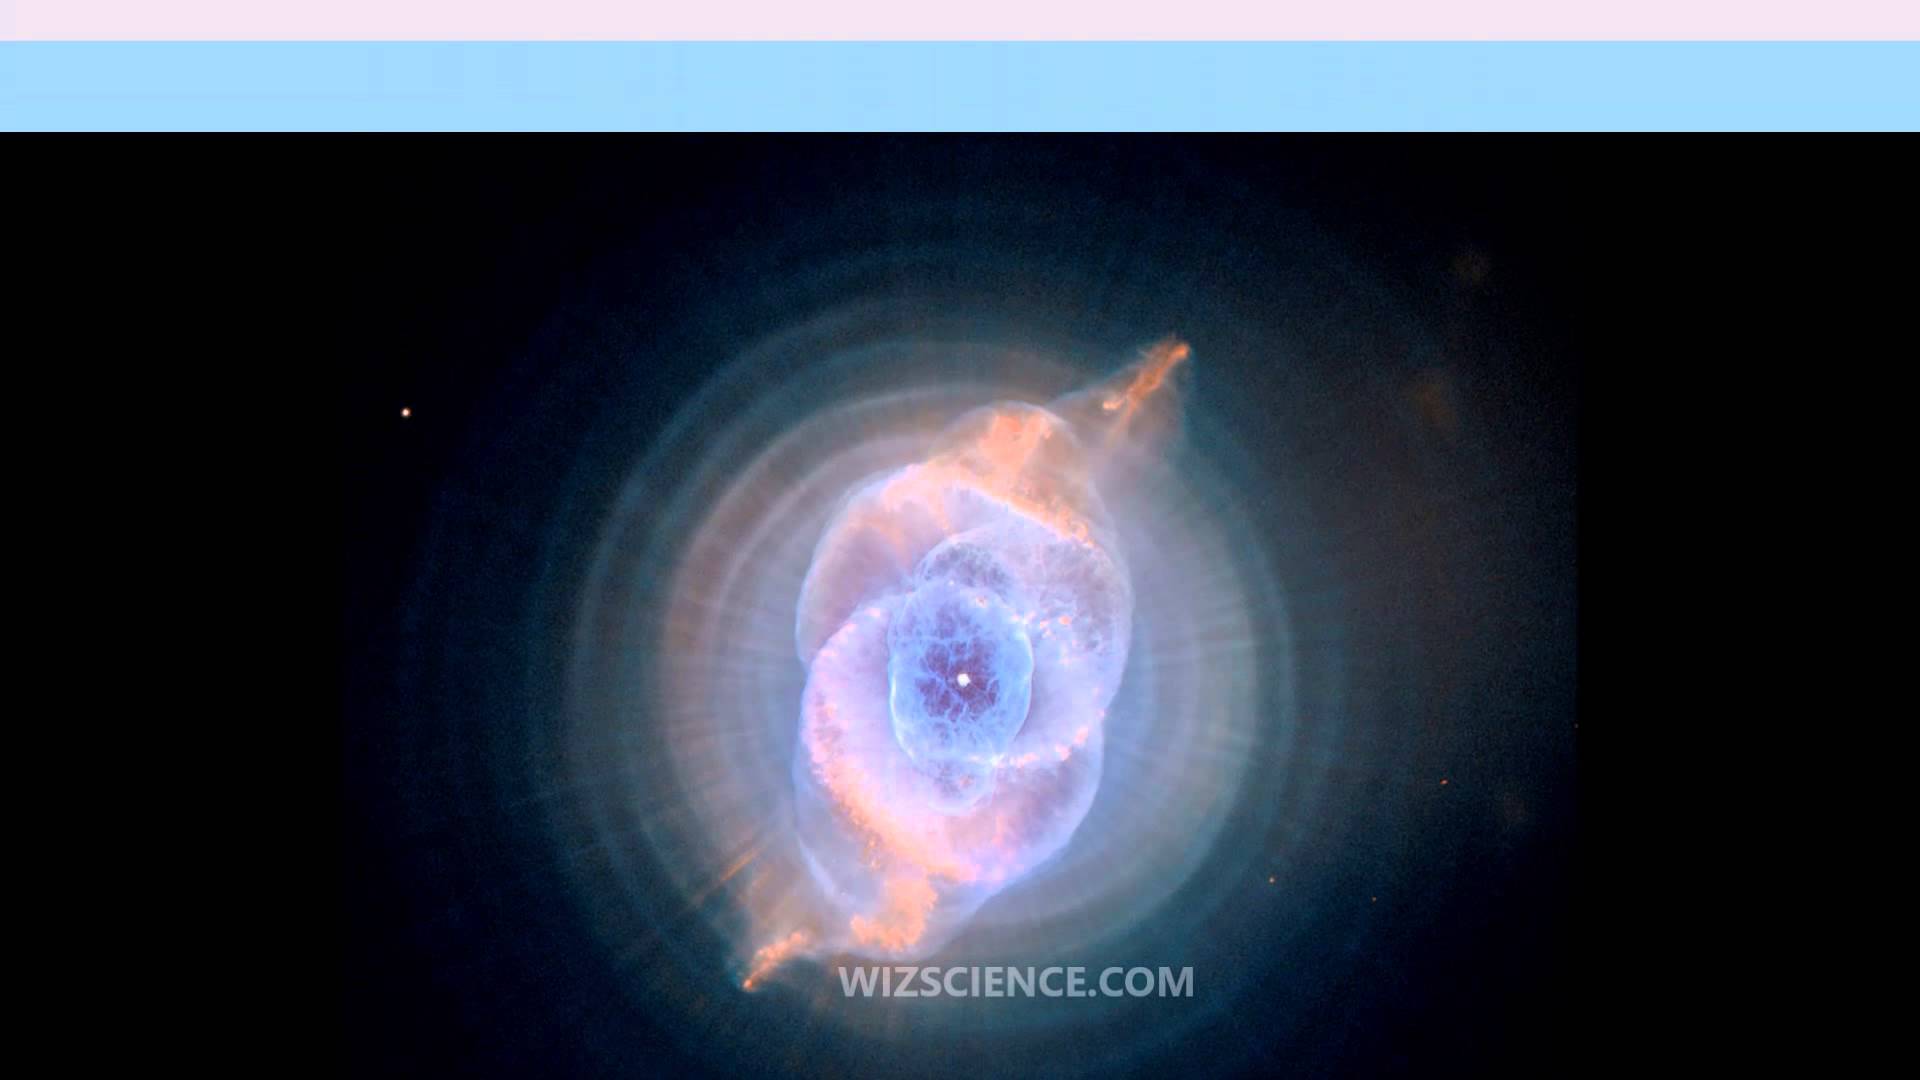 Cat's Eye Nebula - Video Learning - WizScience.com - YouTube